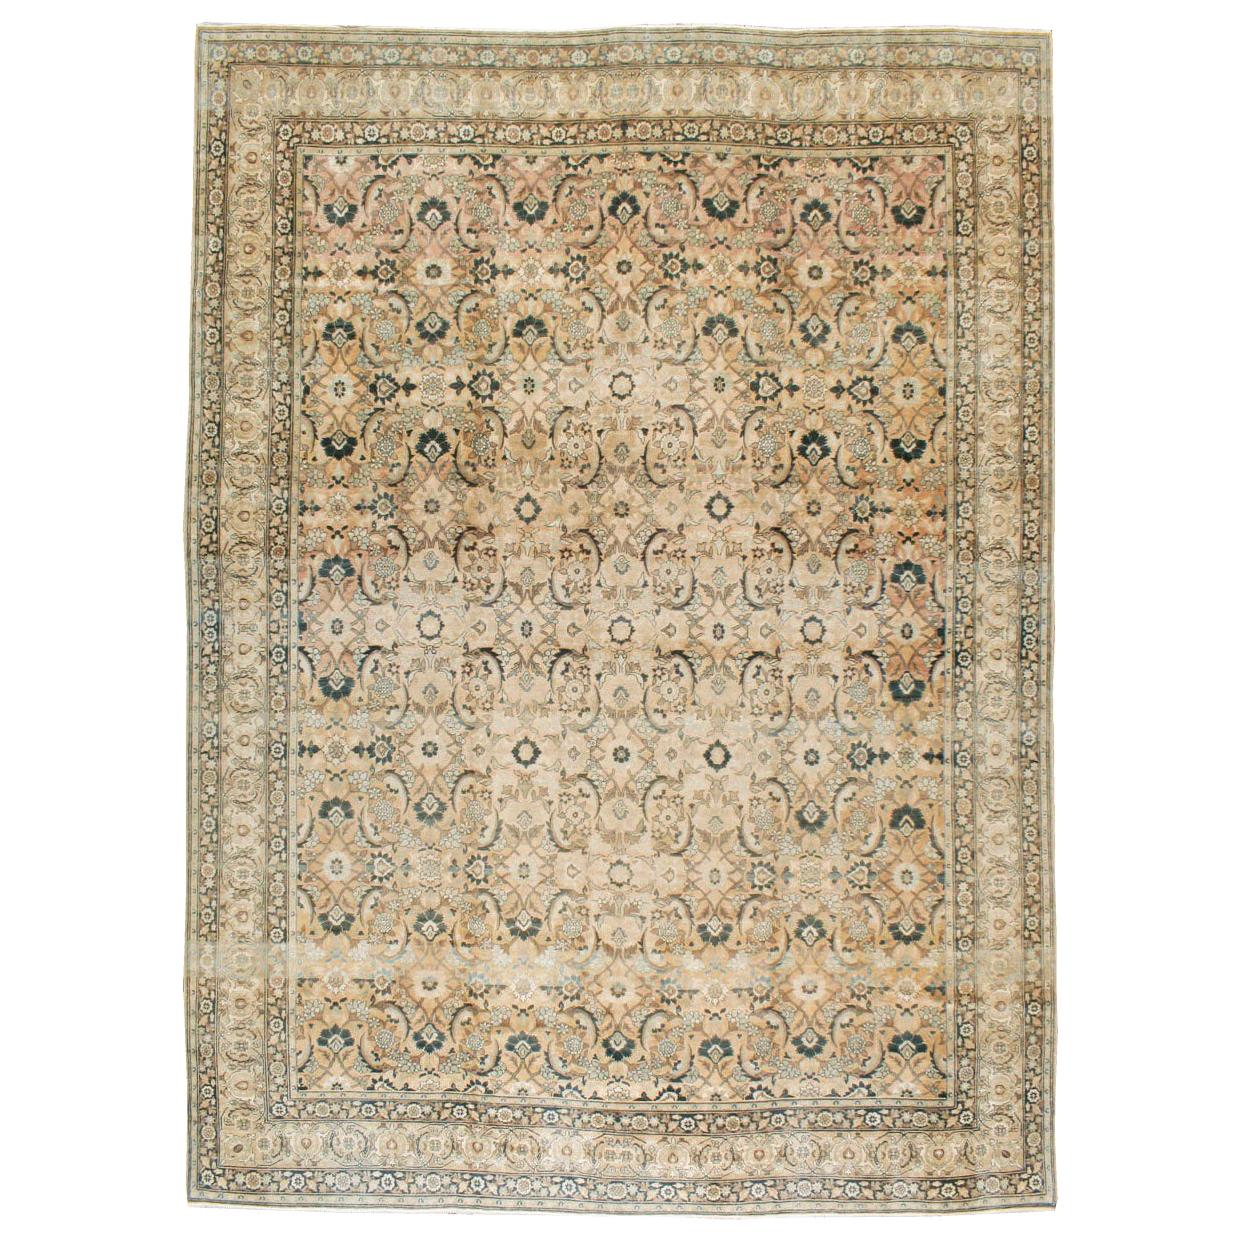 Early 20th Century Handmade Persian Lavar Kerman Room Size Carpet, circa 1920